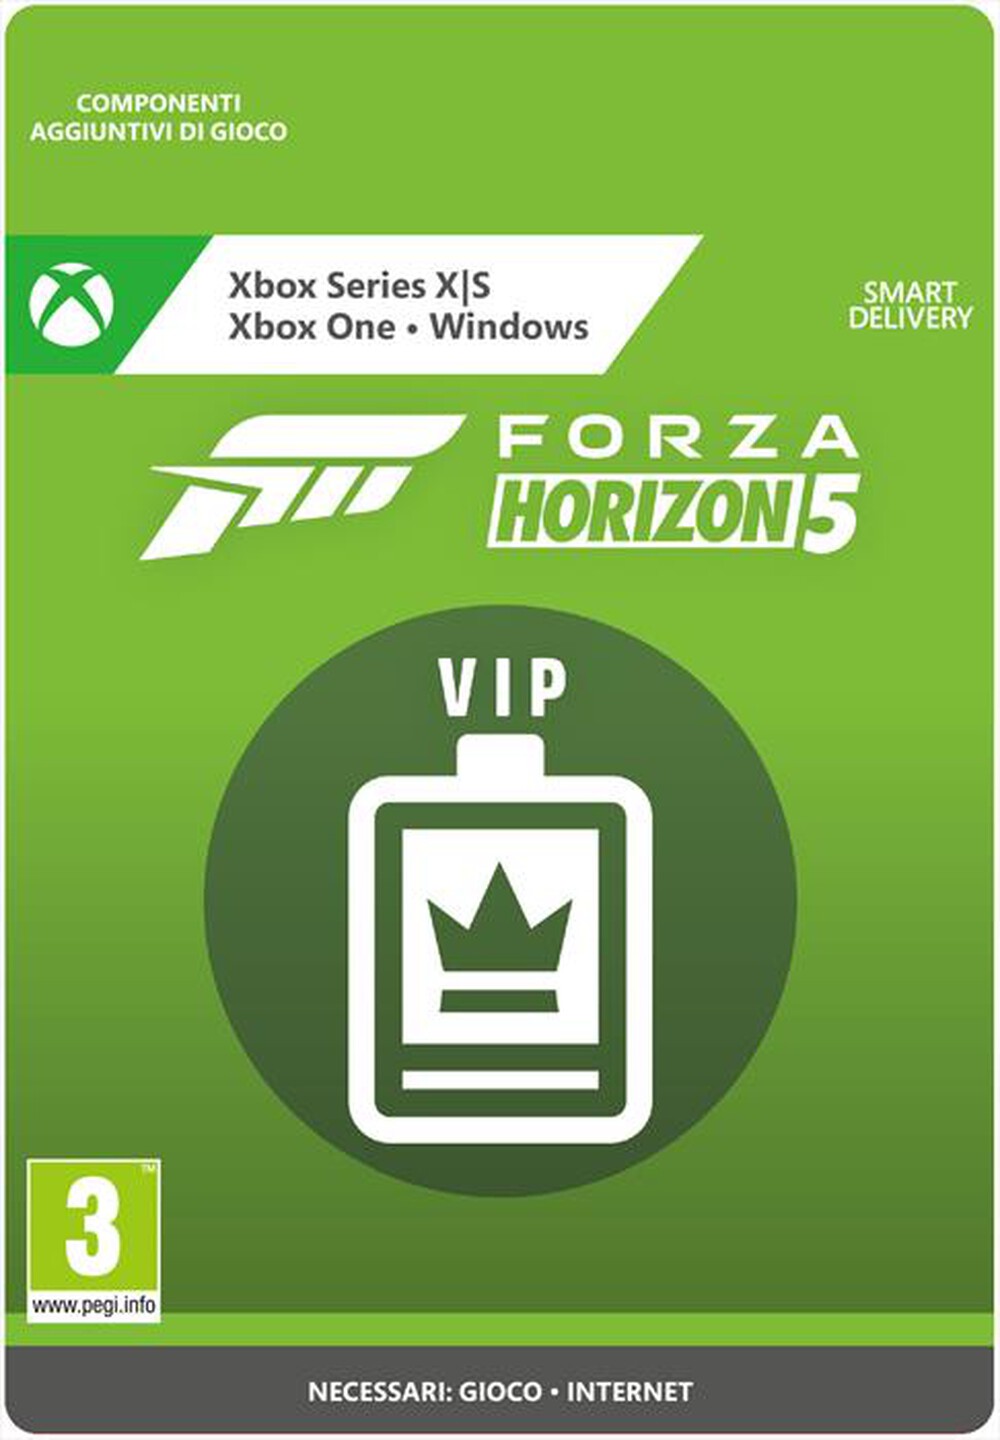 "MICROSOFT - Forza Horizon 5 VIP Membership IT"